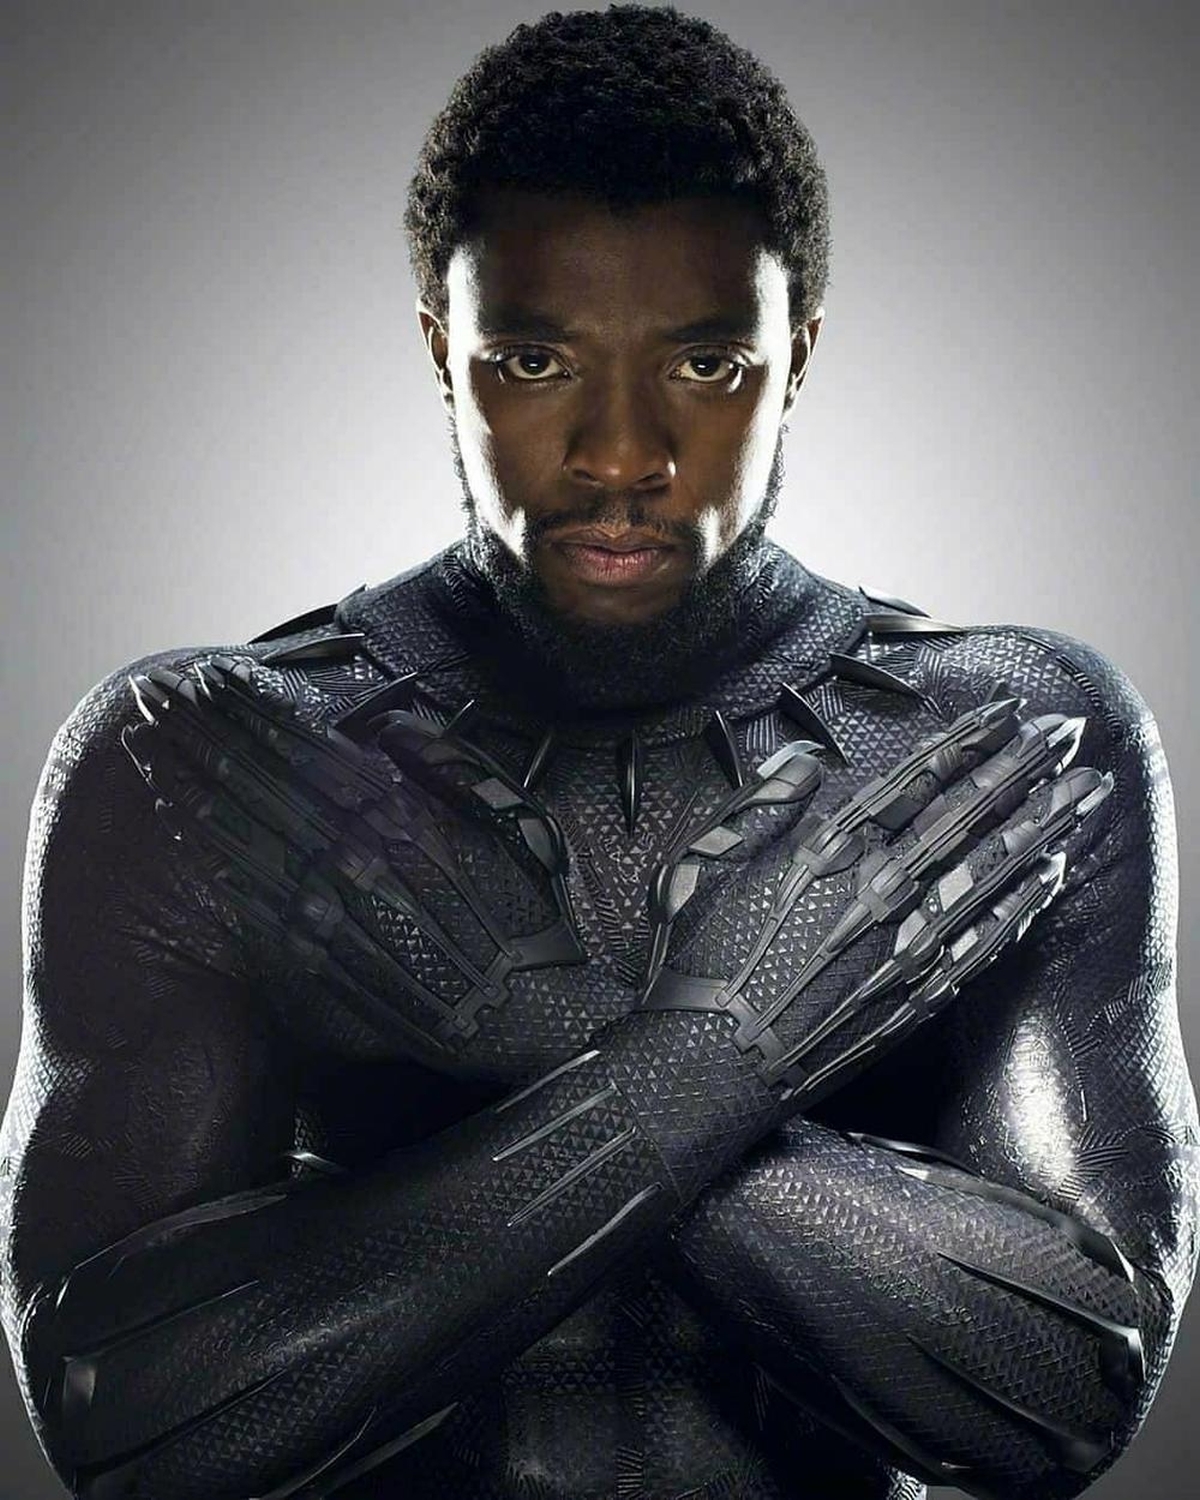 Chadwick Boseman (1976-2020) as Black Panther